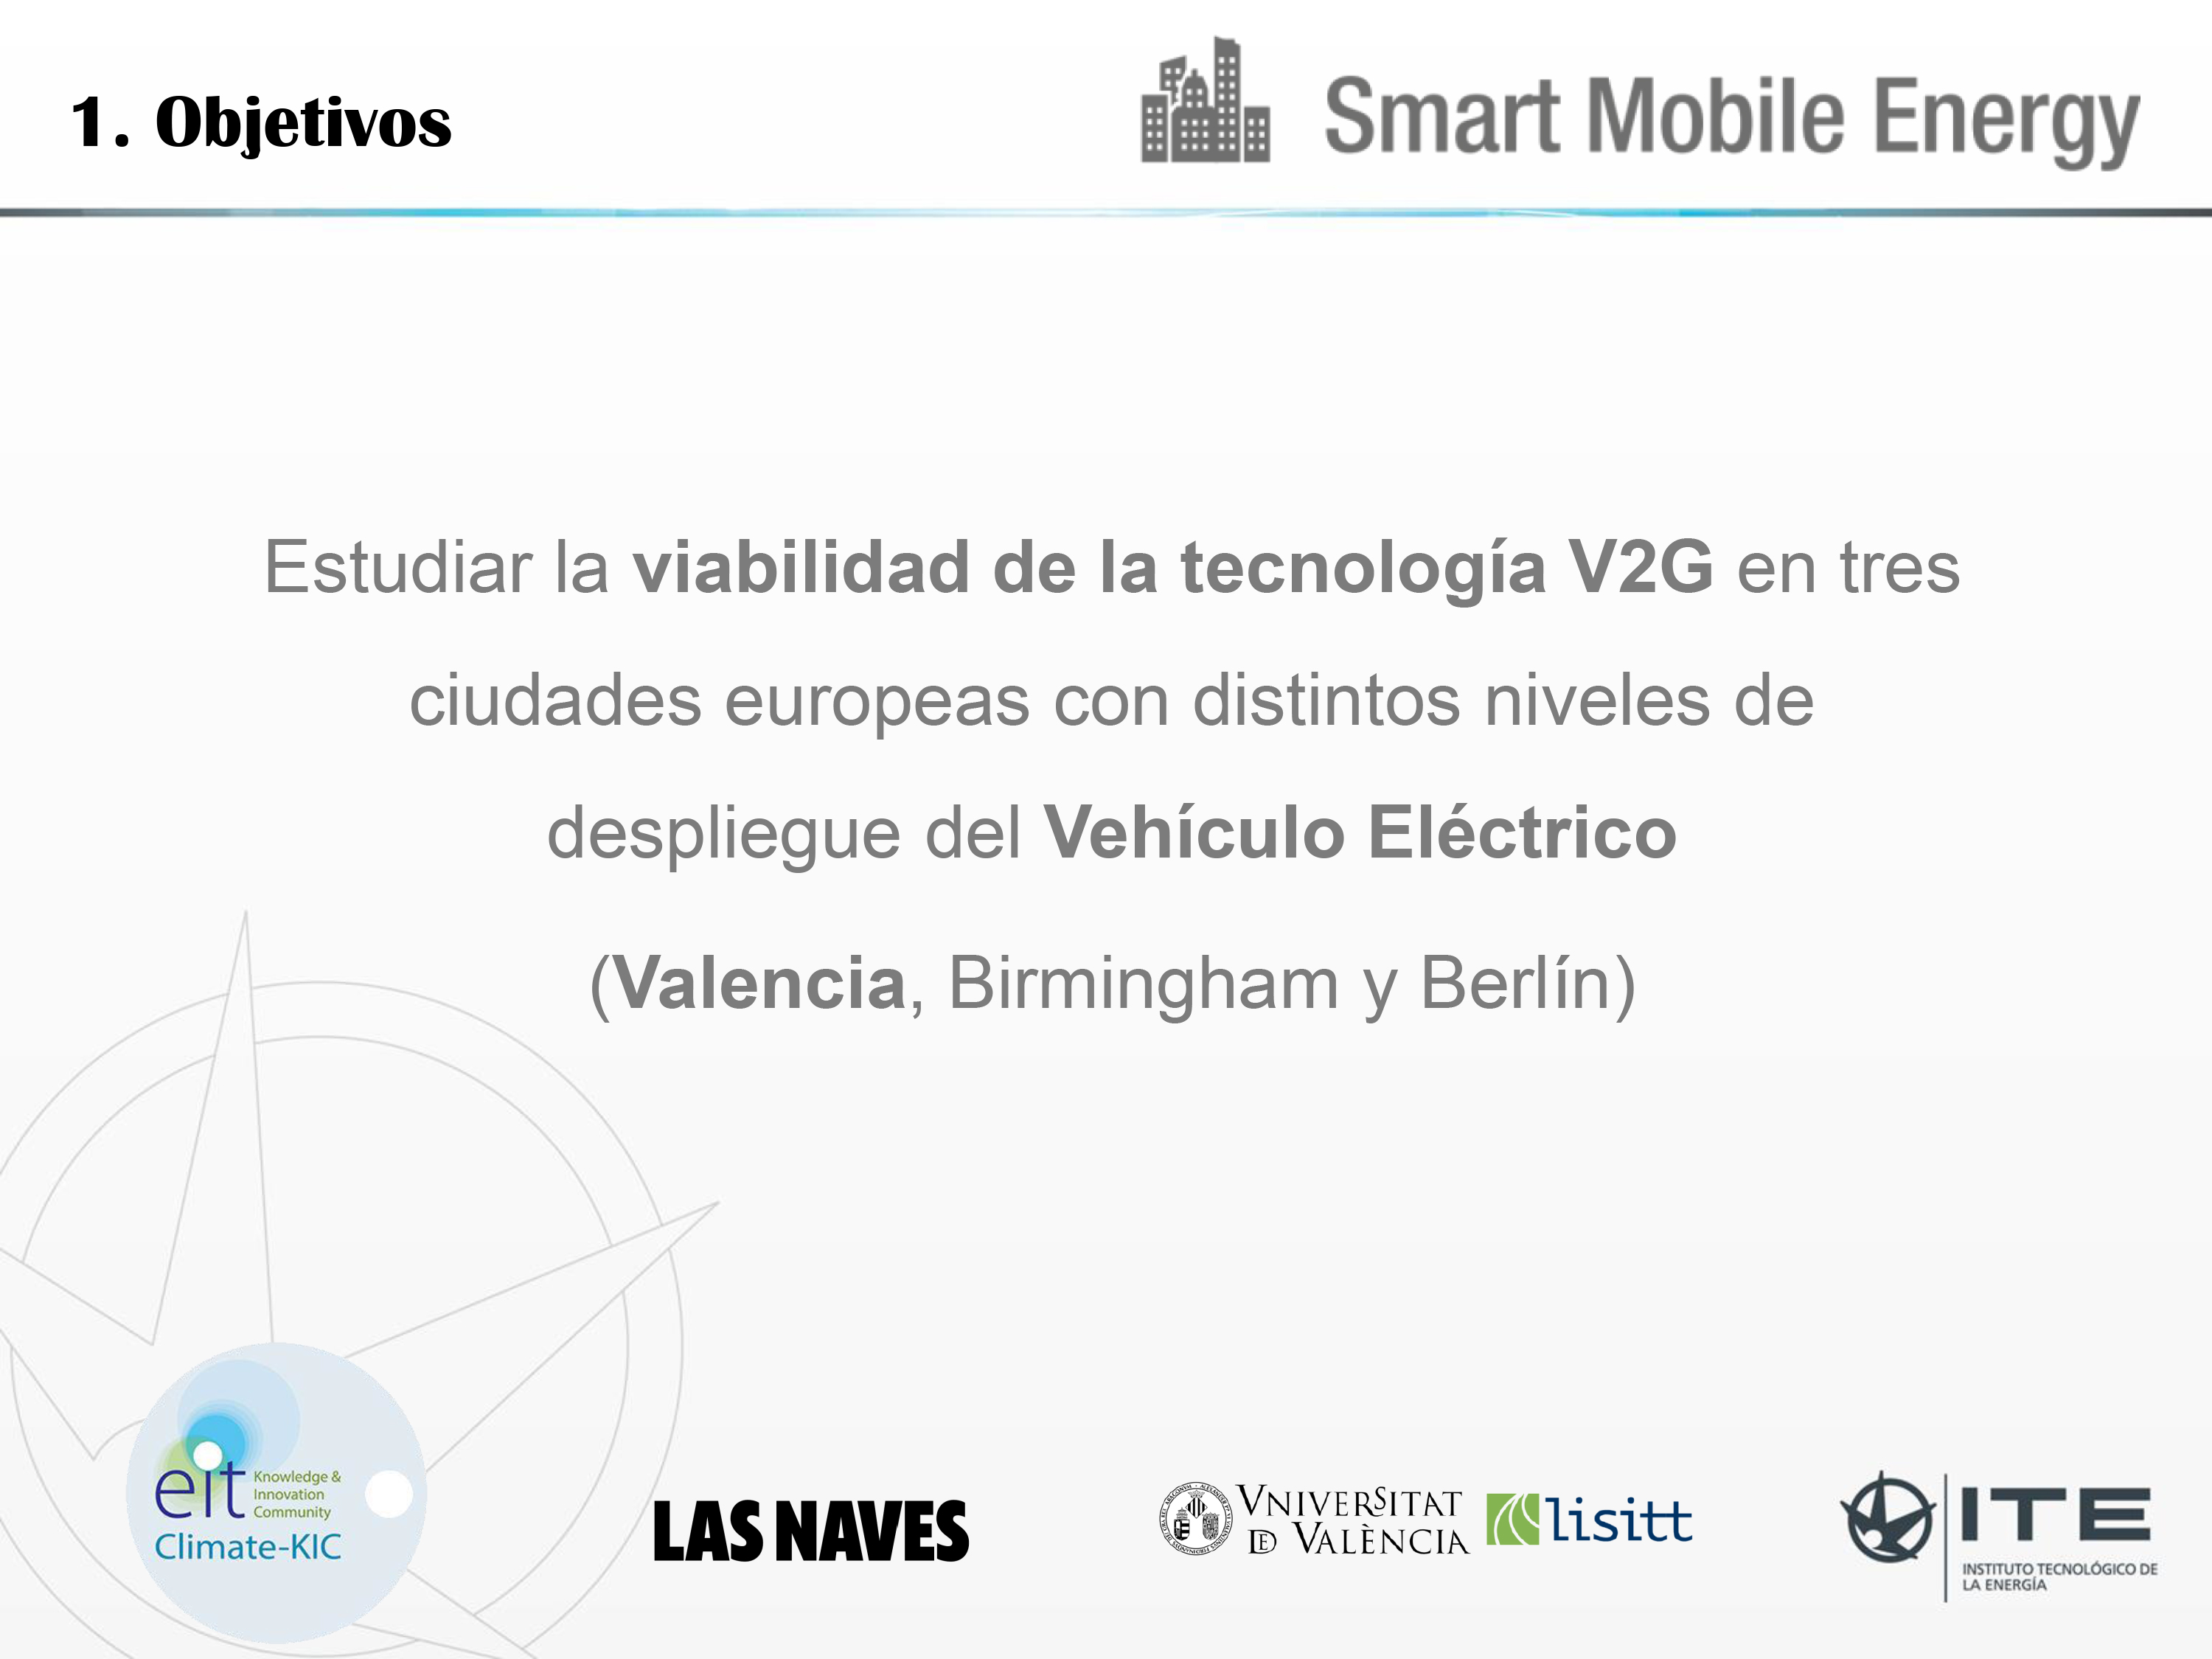 Resultados proyecto Smart Mobile Energy (SME) - Ovans